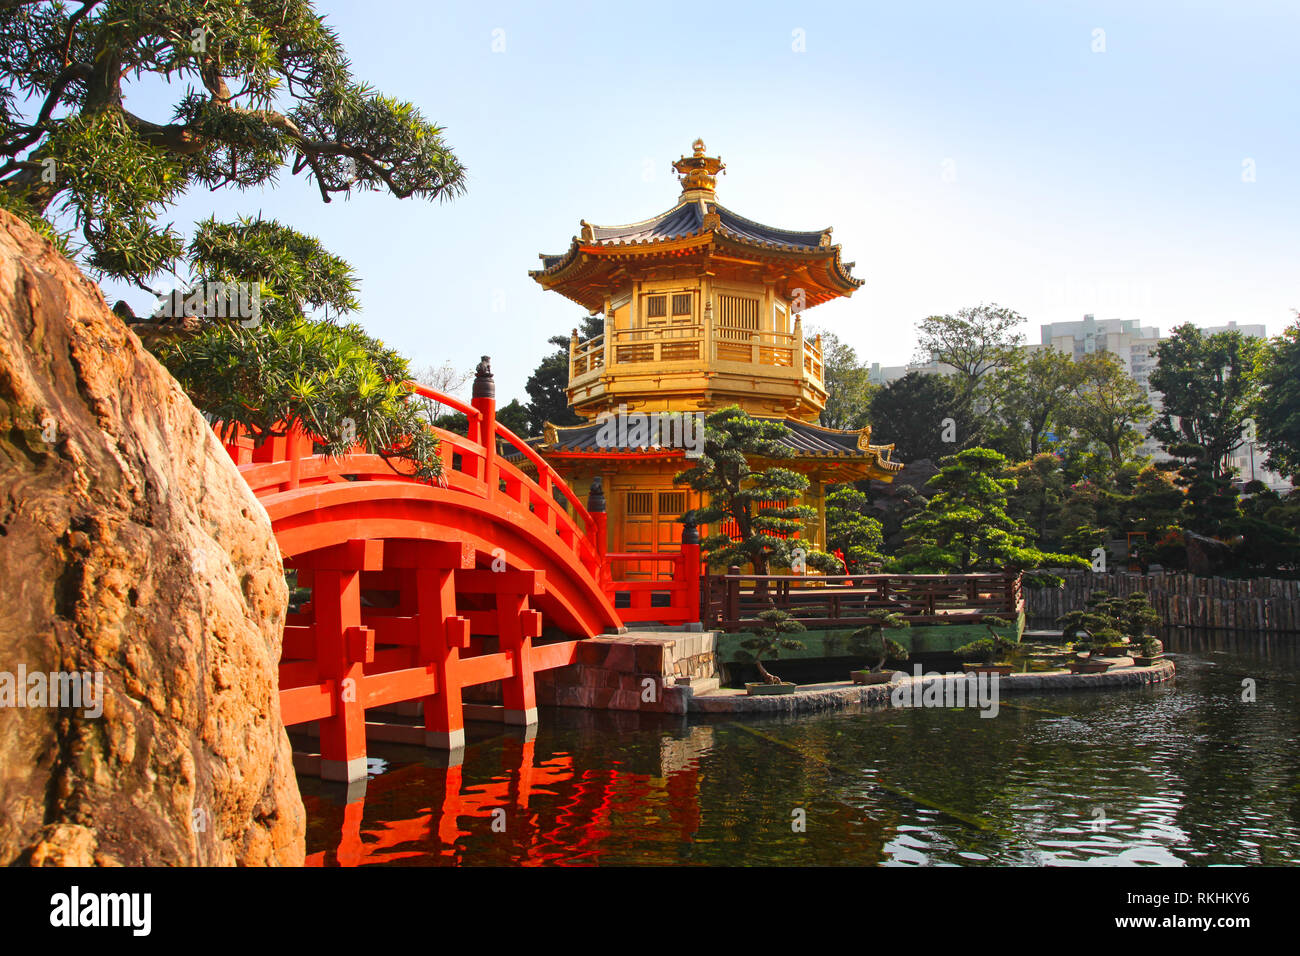 The Golden pavilion and red bridge at sunrise, in Nan Lian Garden near Chi Lin Nunnery, famous landmarks in Hong Kong . Stock Photo